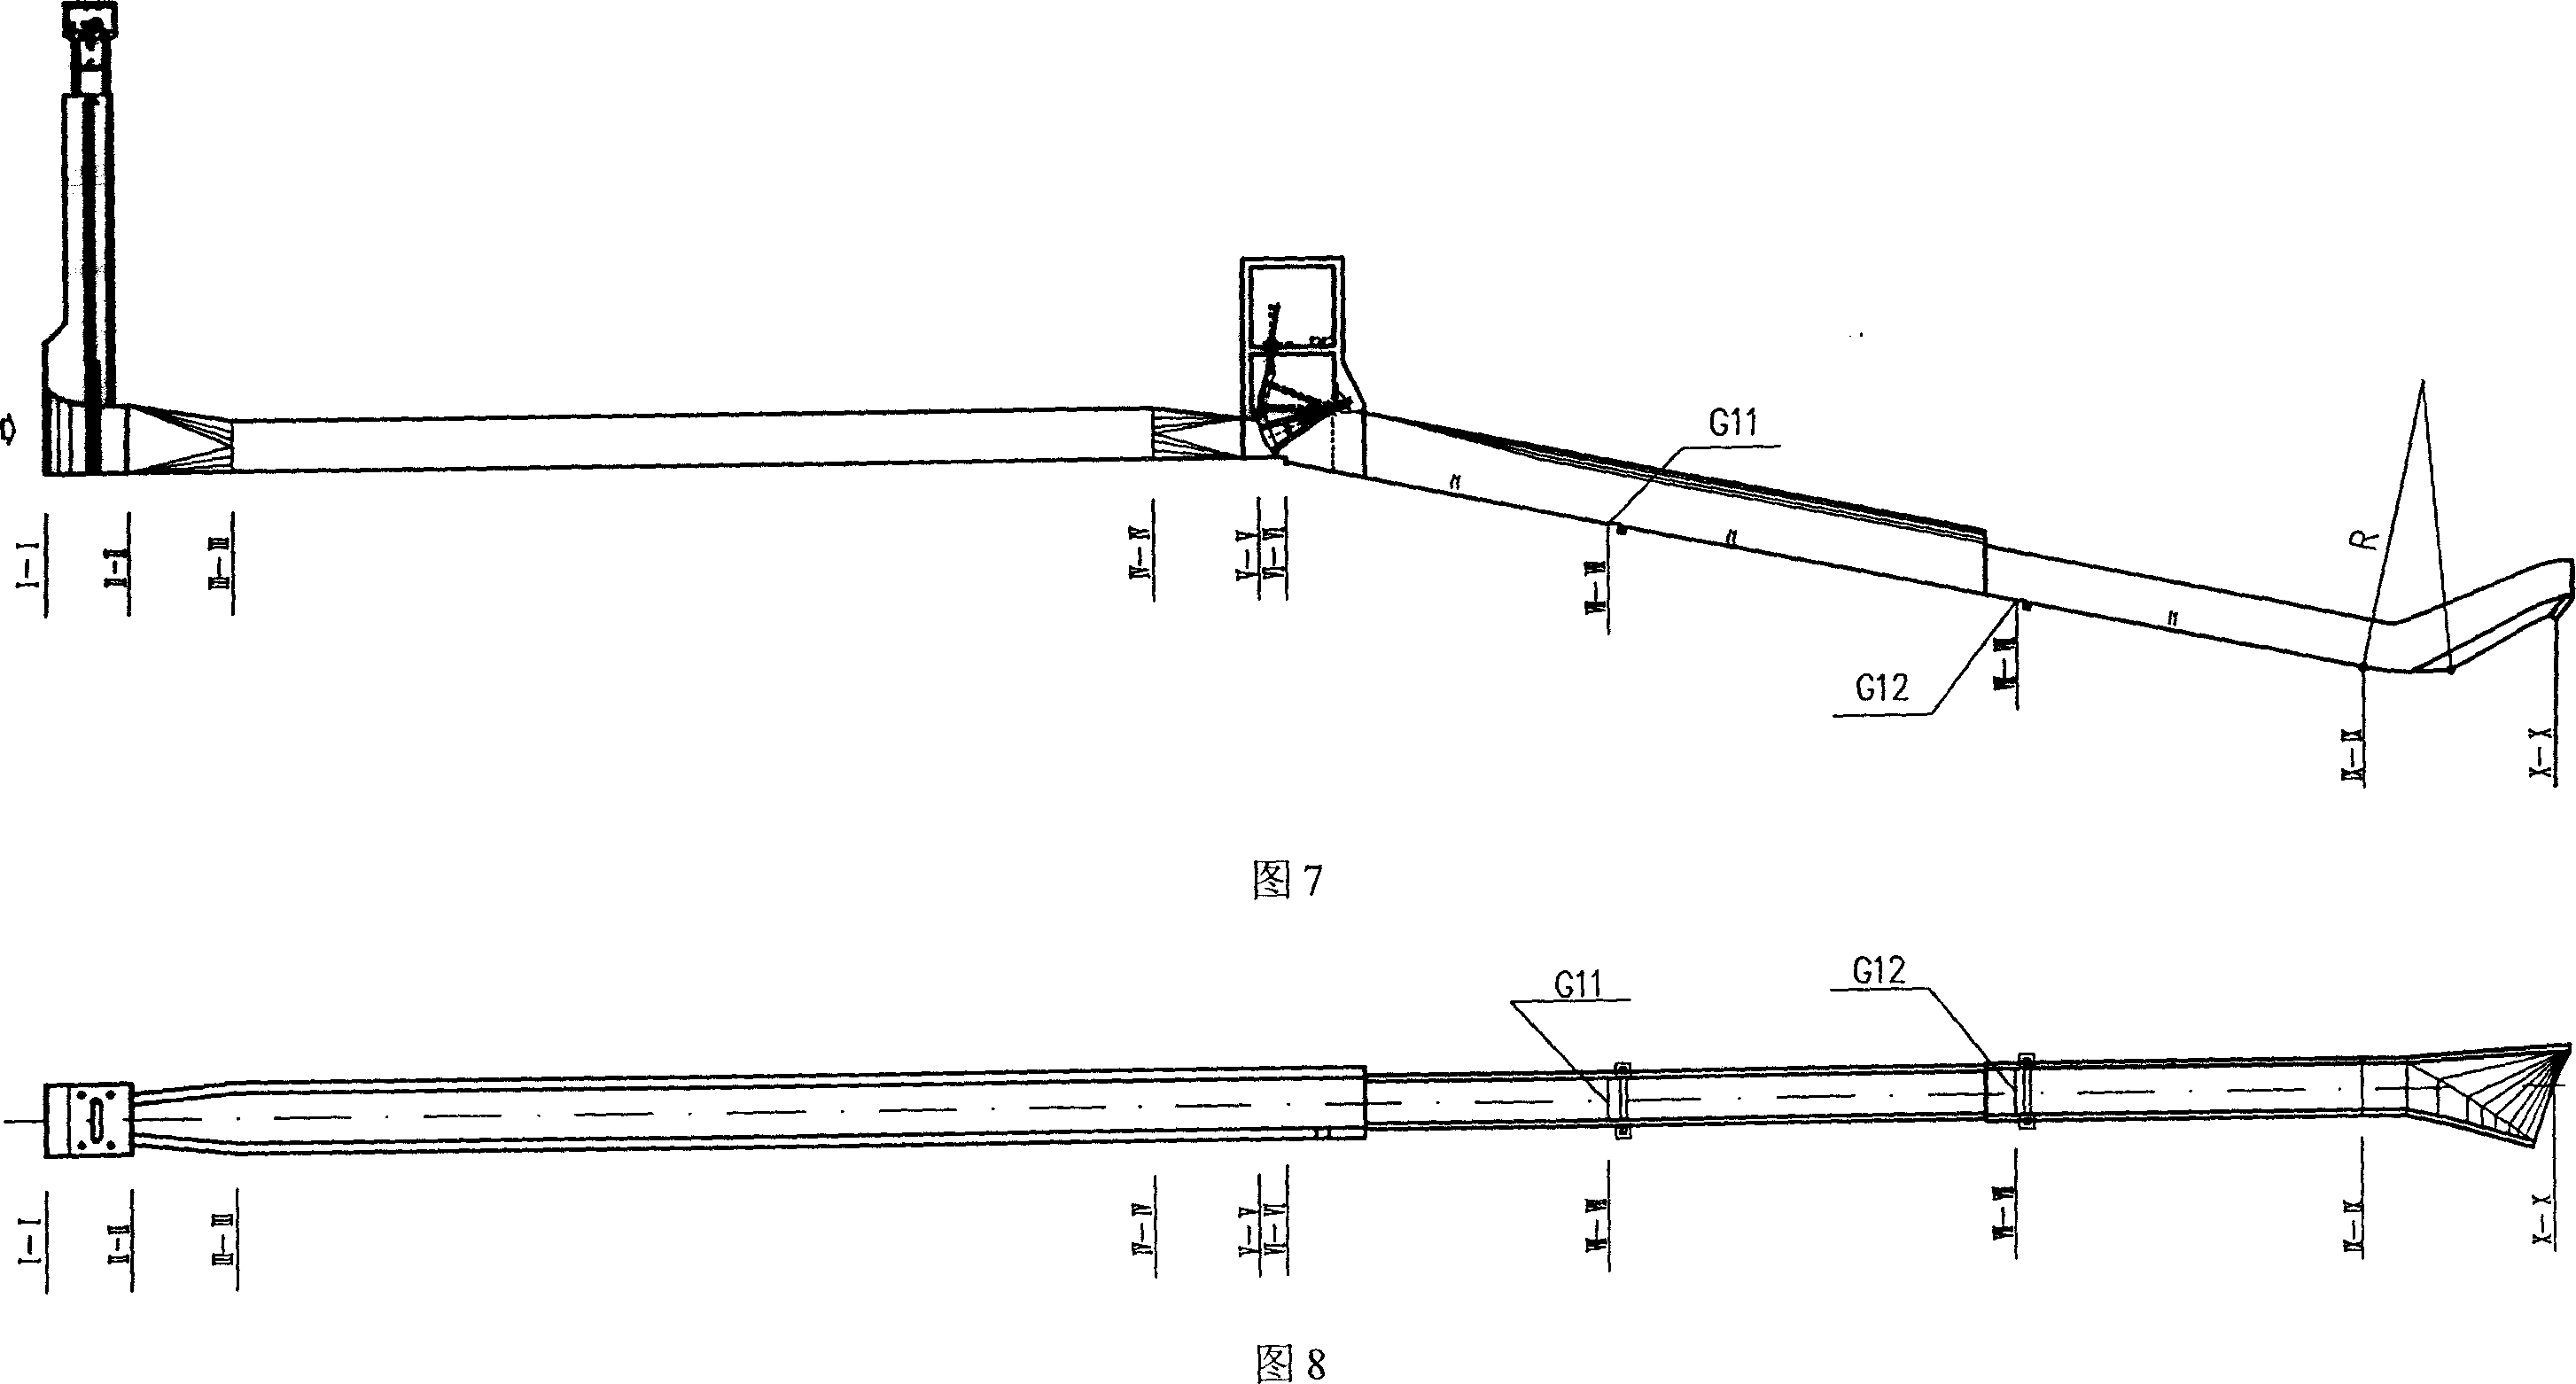 Differential aeration sluice device